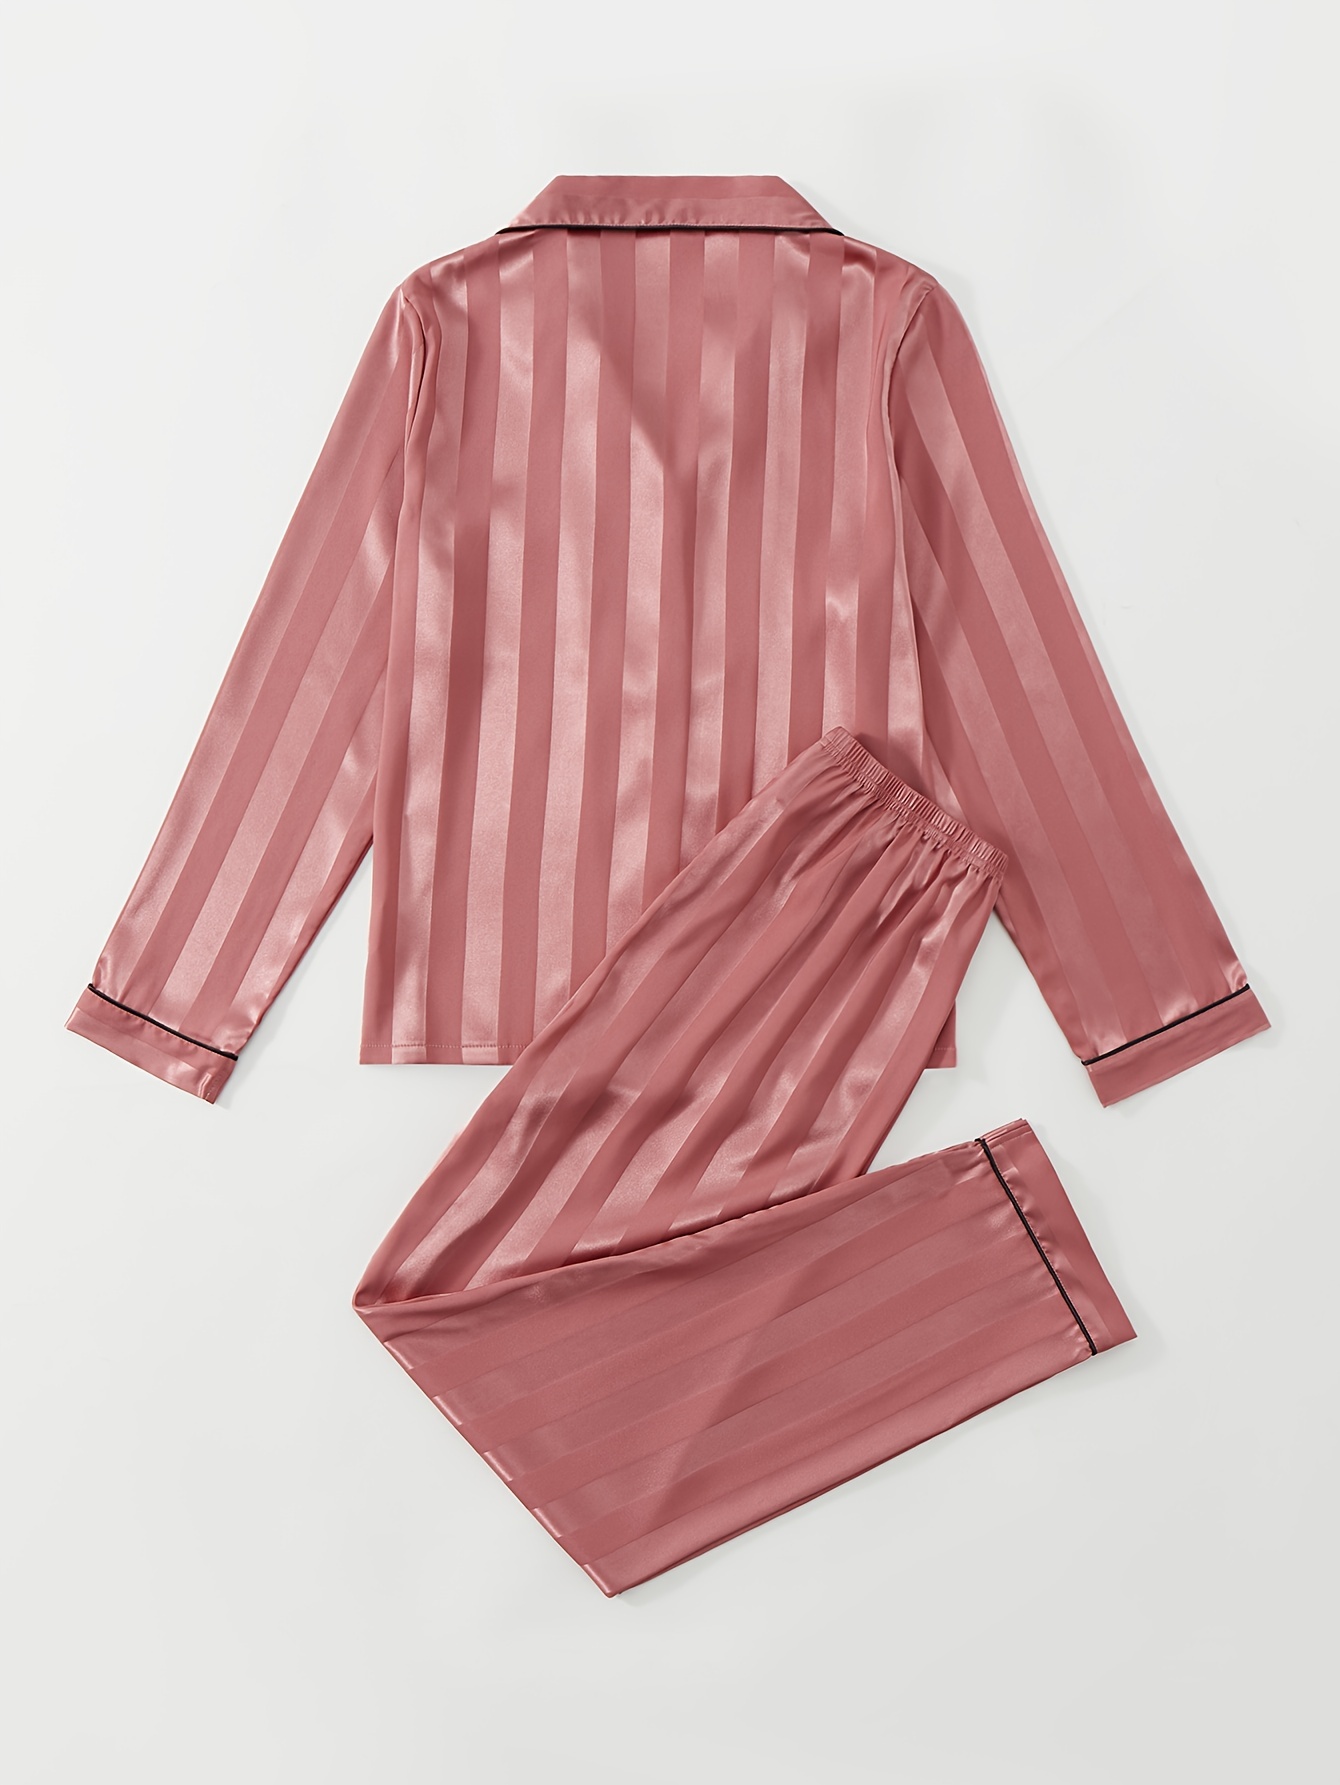 NEW Victoria's Secret SILKY SATIN Lounge Striped Pants Pale Pink